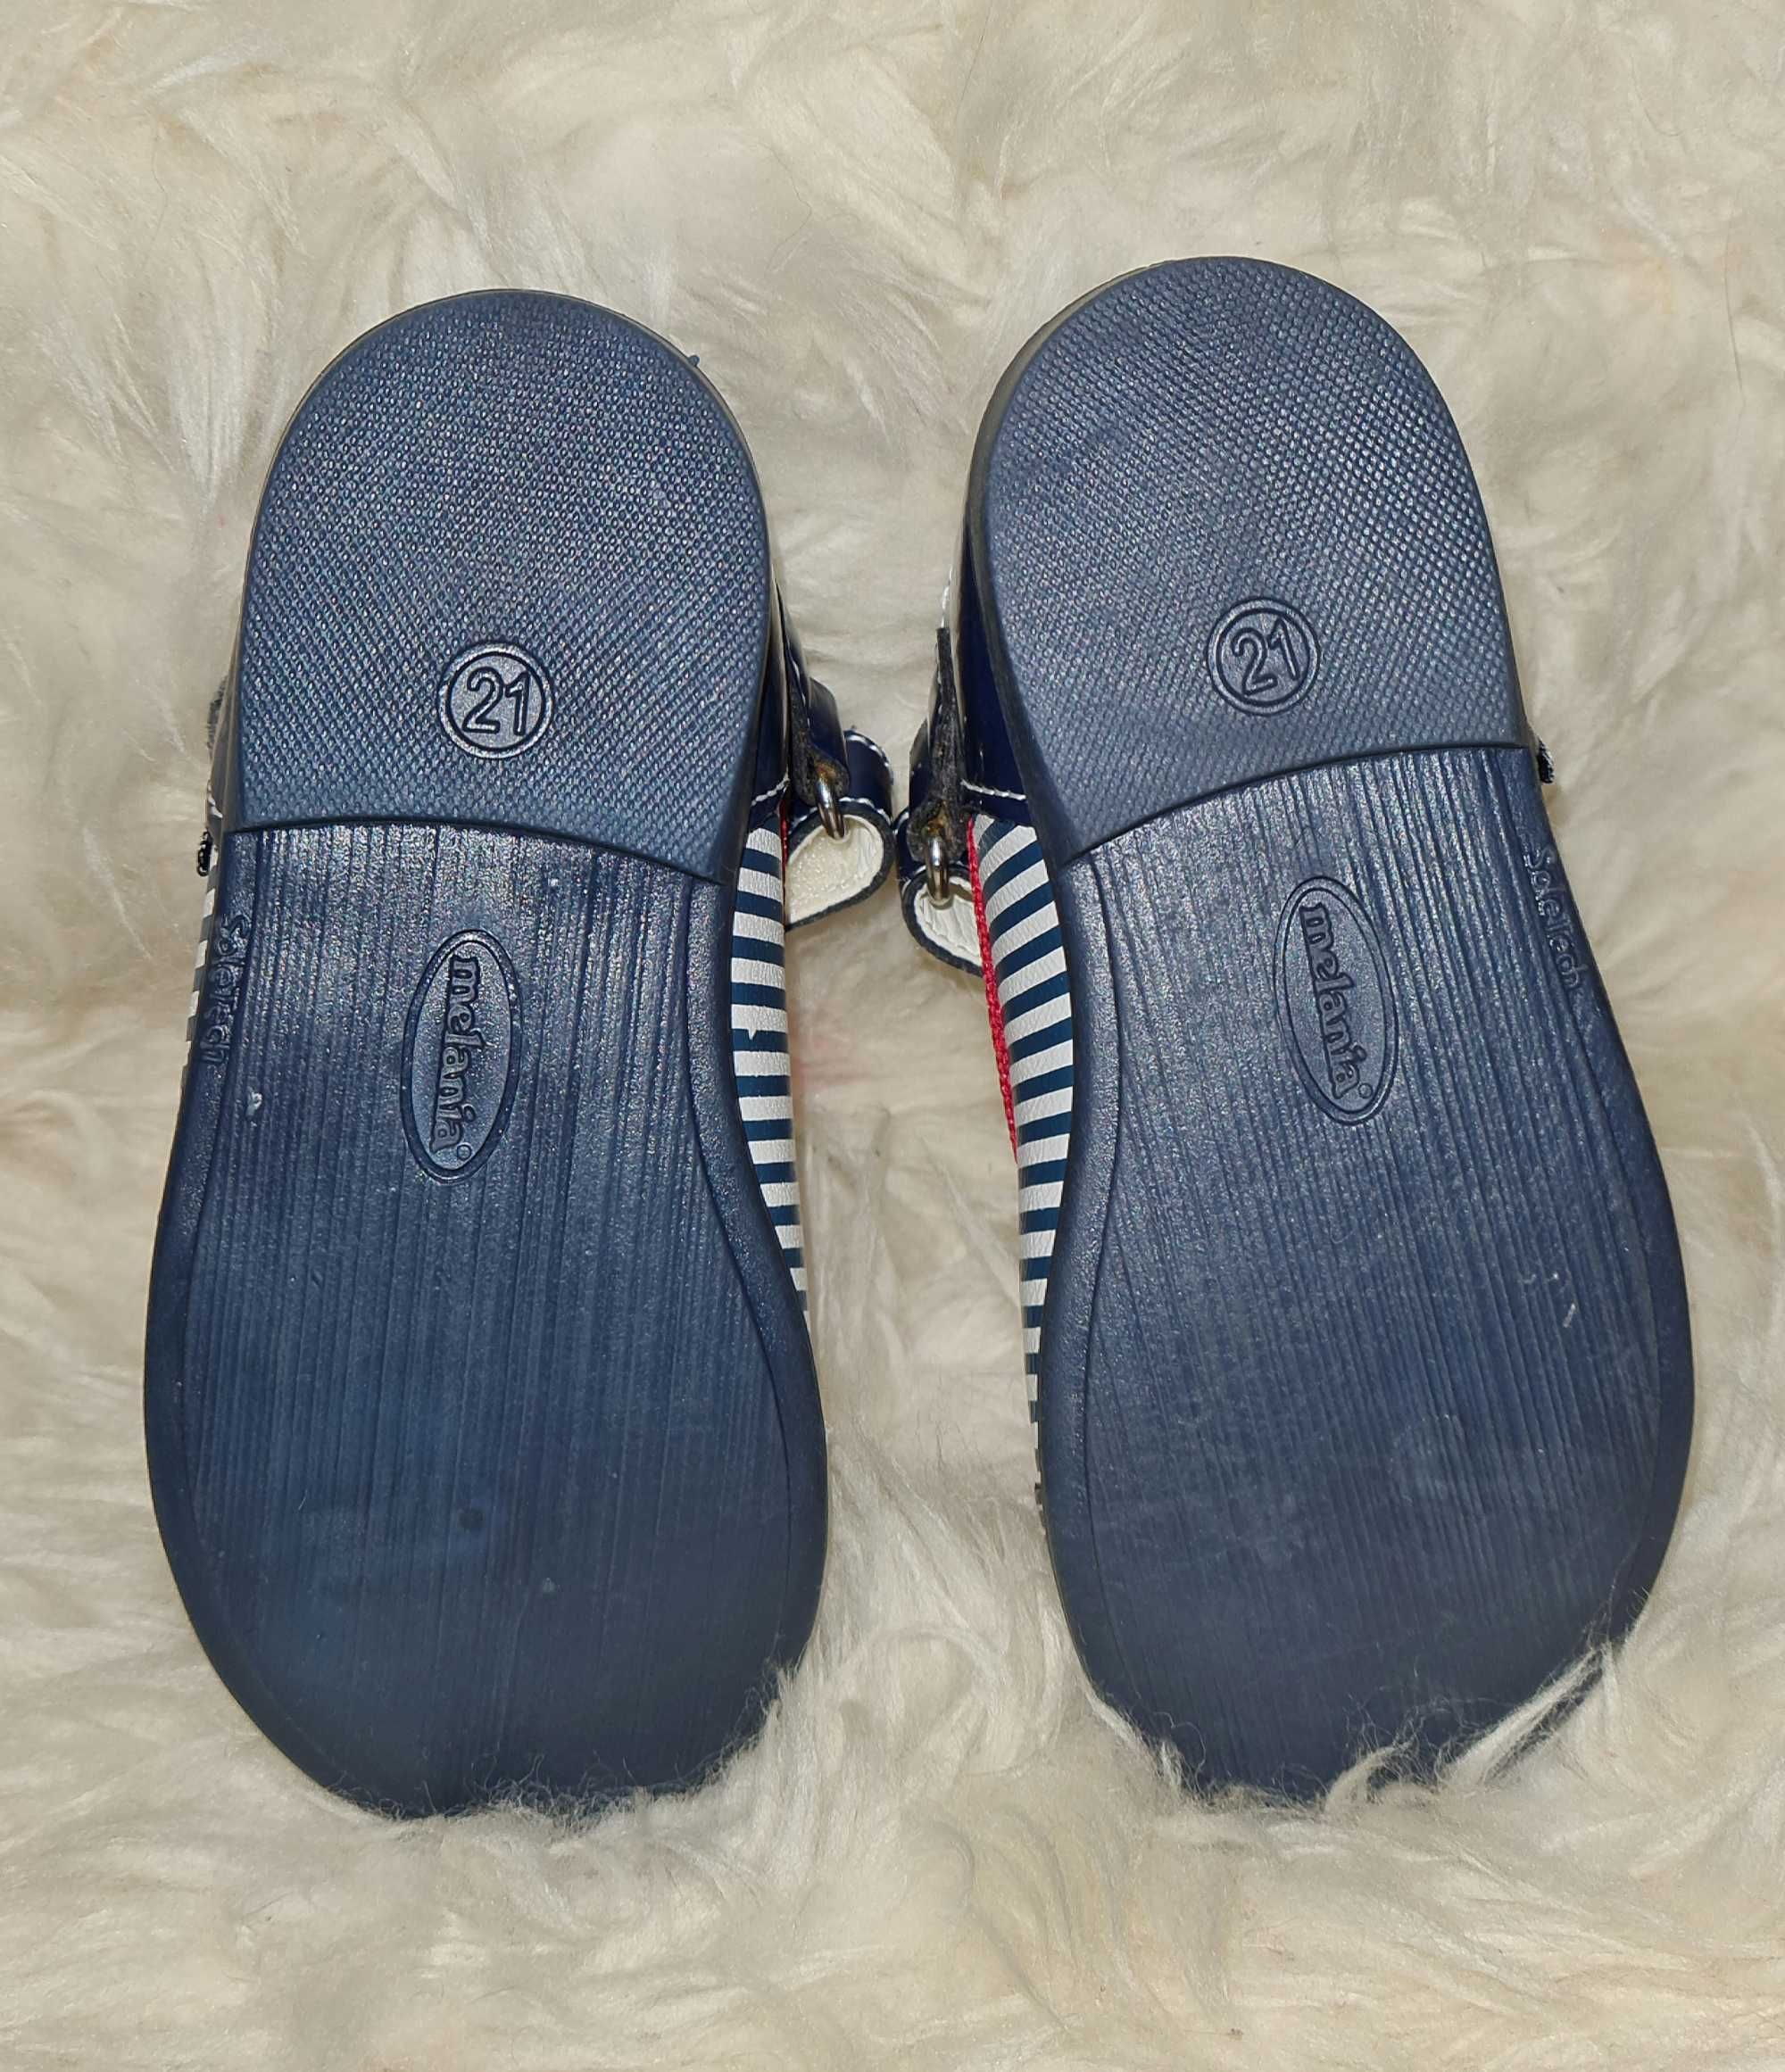 Pantofi fata Melania bleumarin piele naturala lacuita masura 21